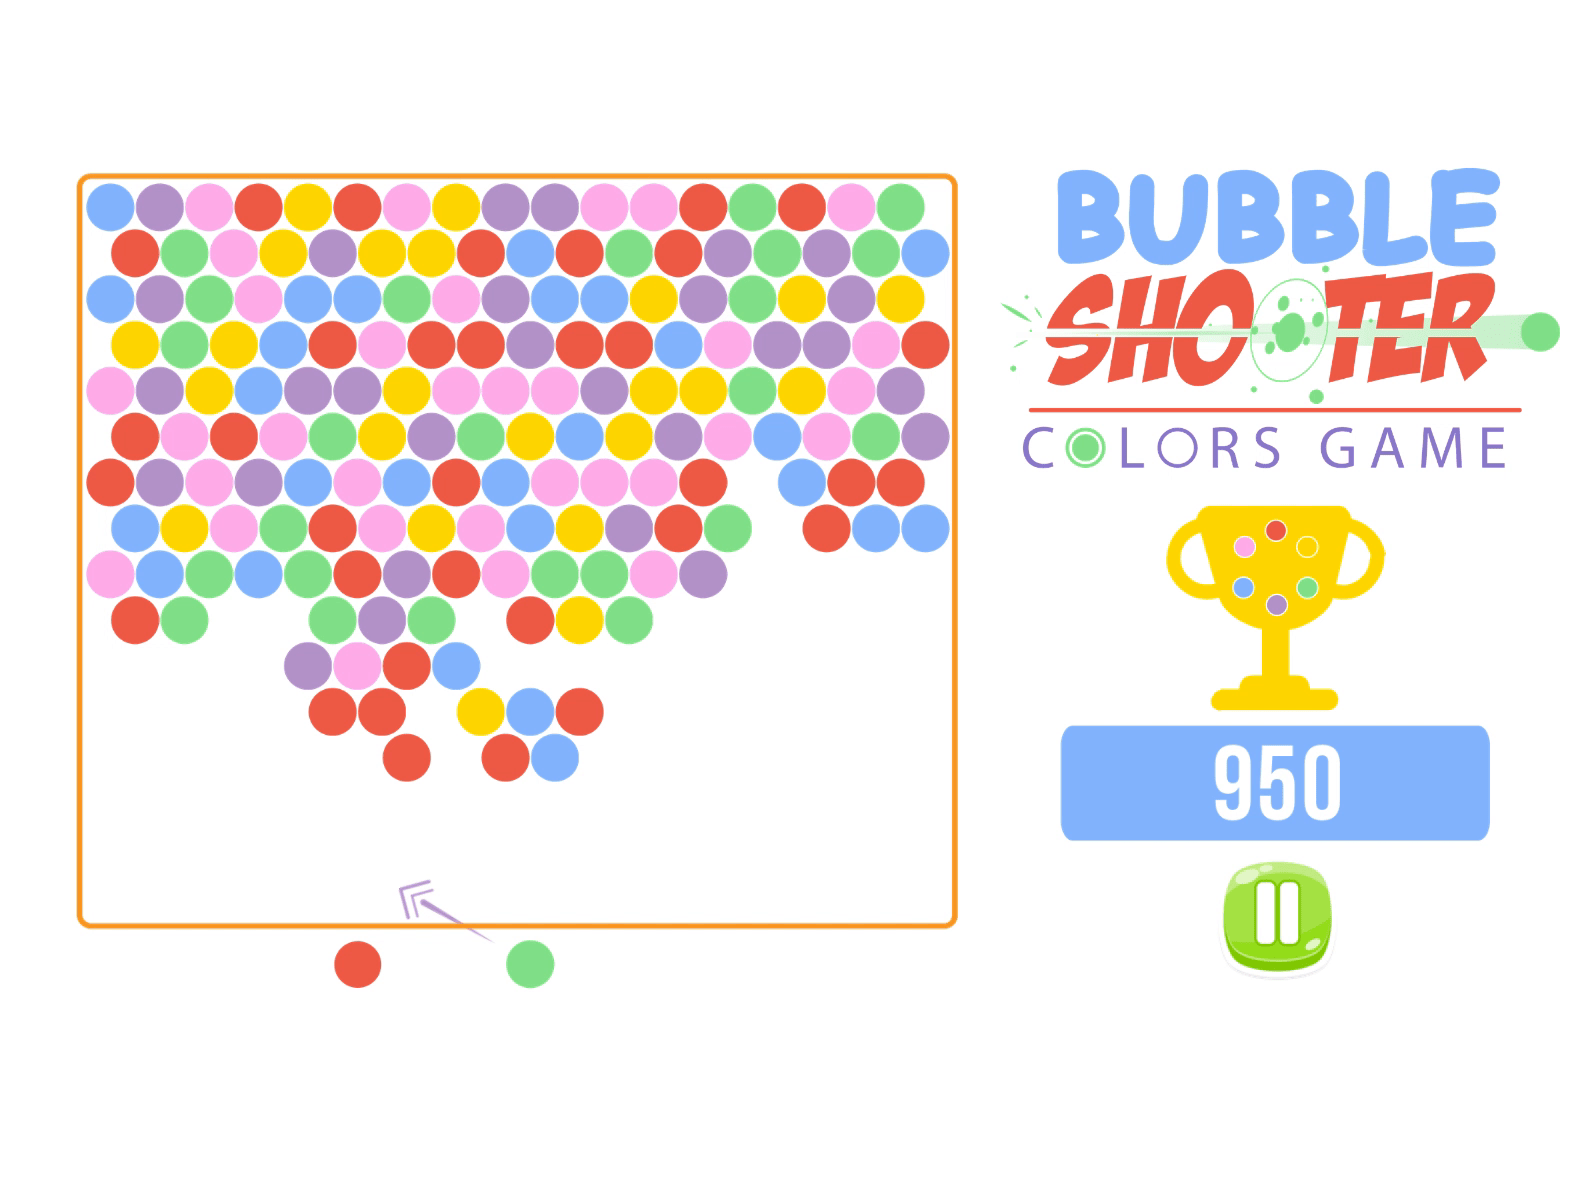 Bubble Shooter Colors Game Screenshot 15